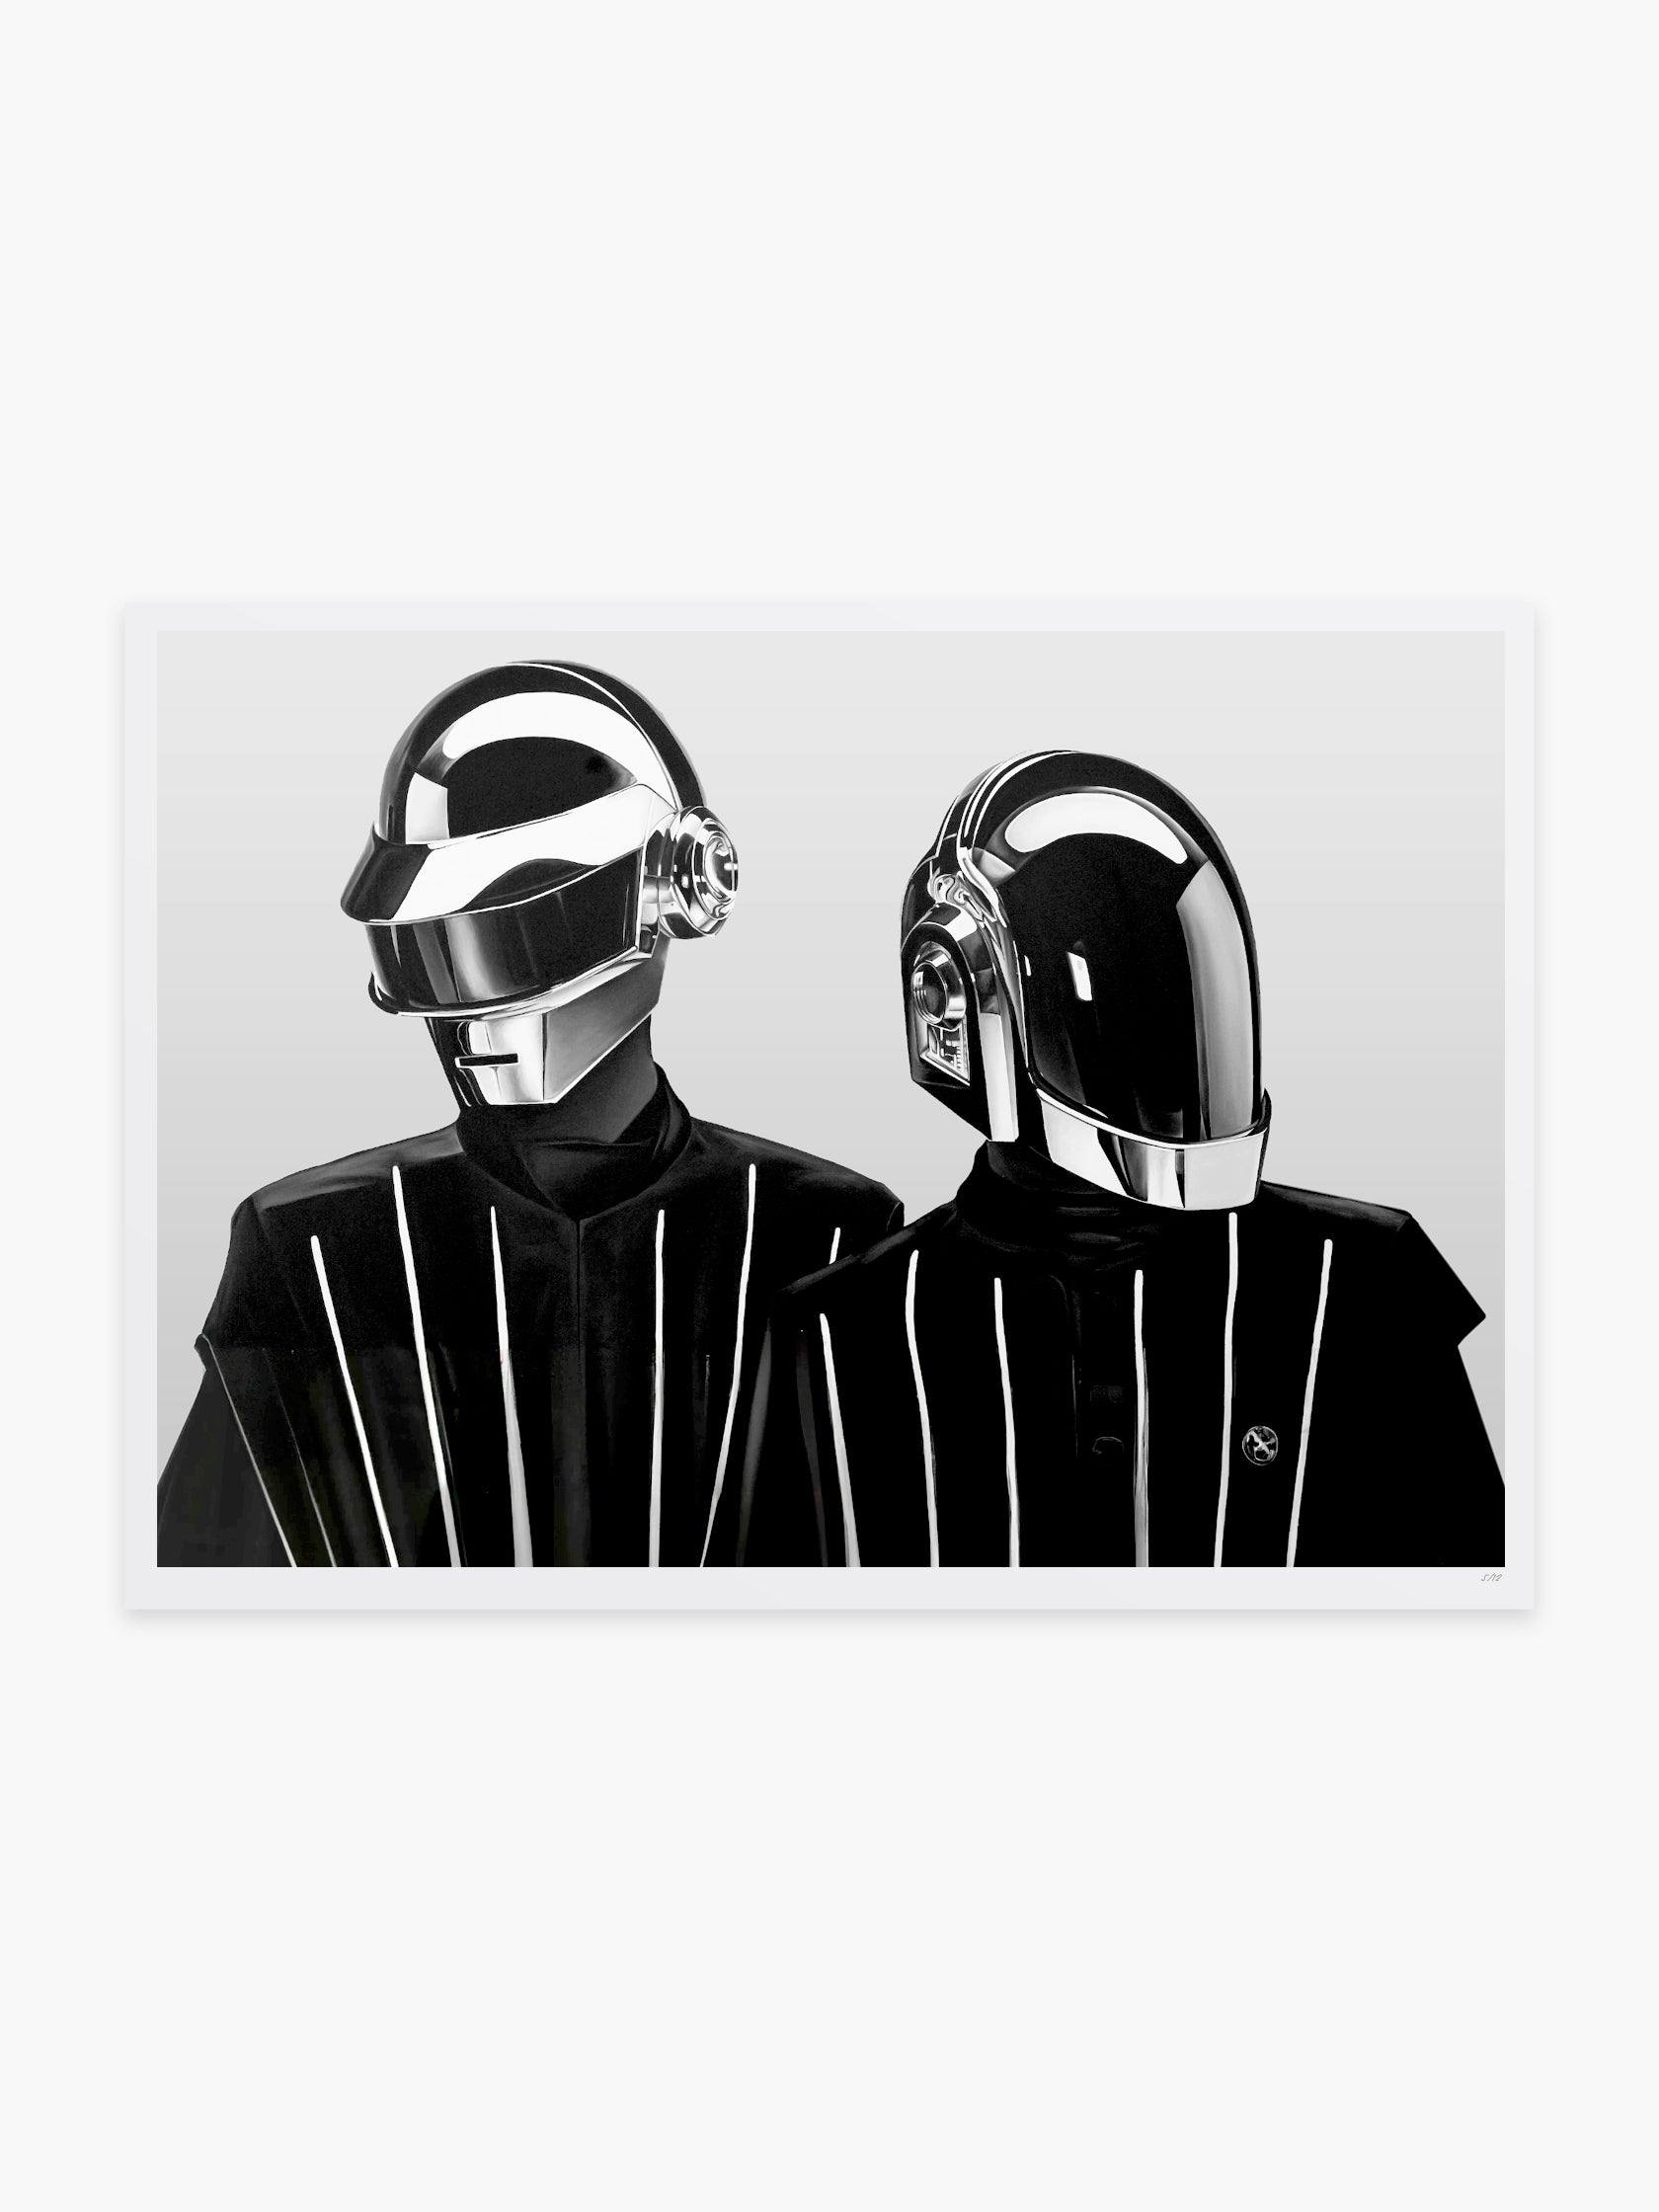 Daft Punk Framed Print